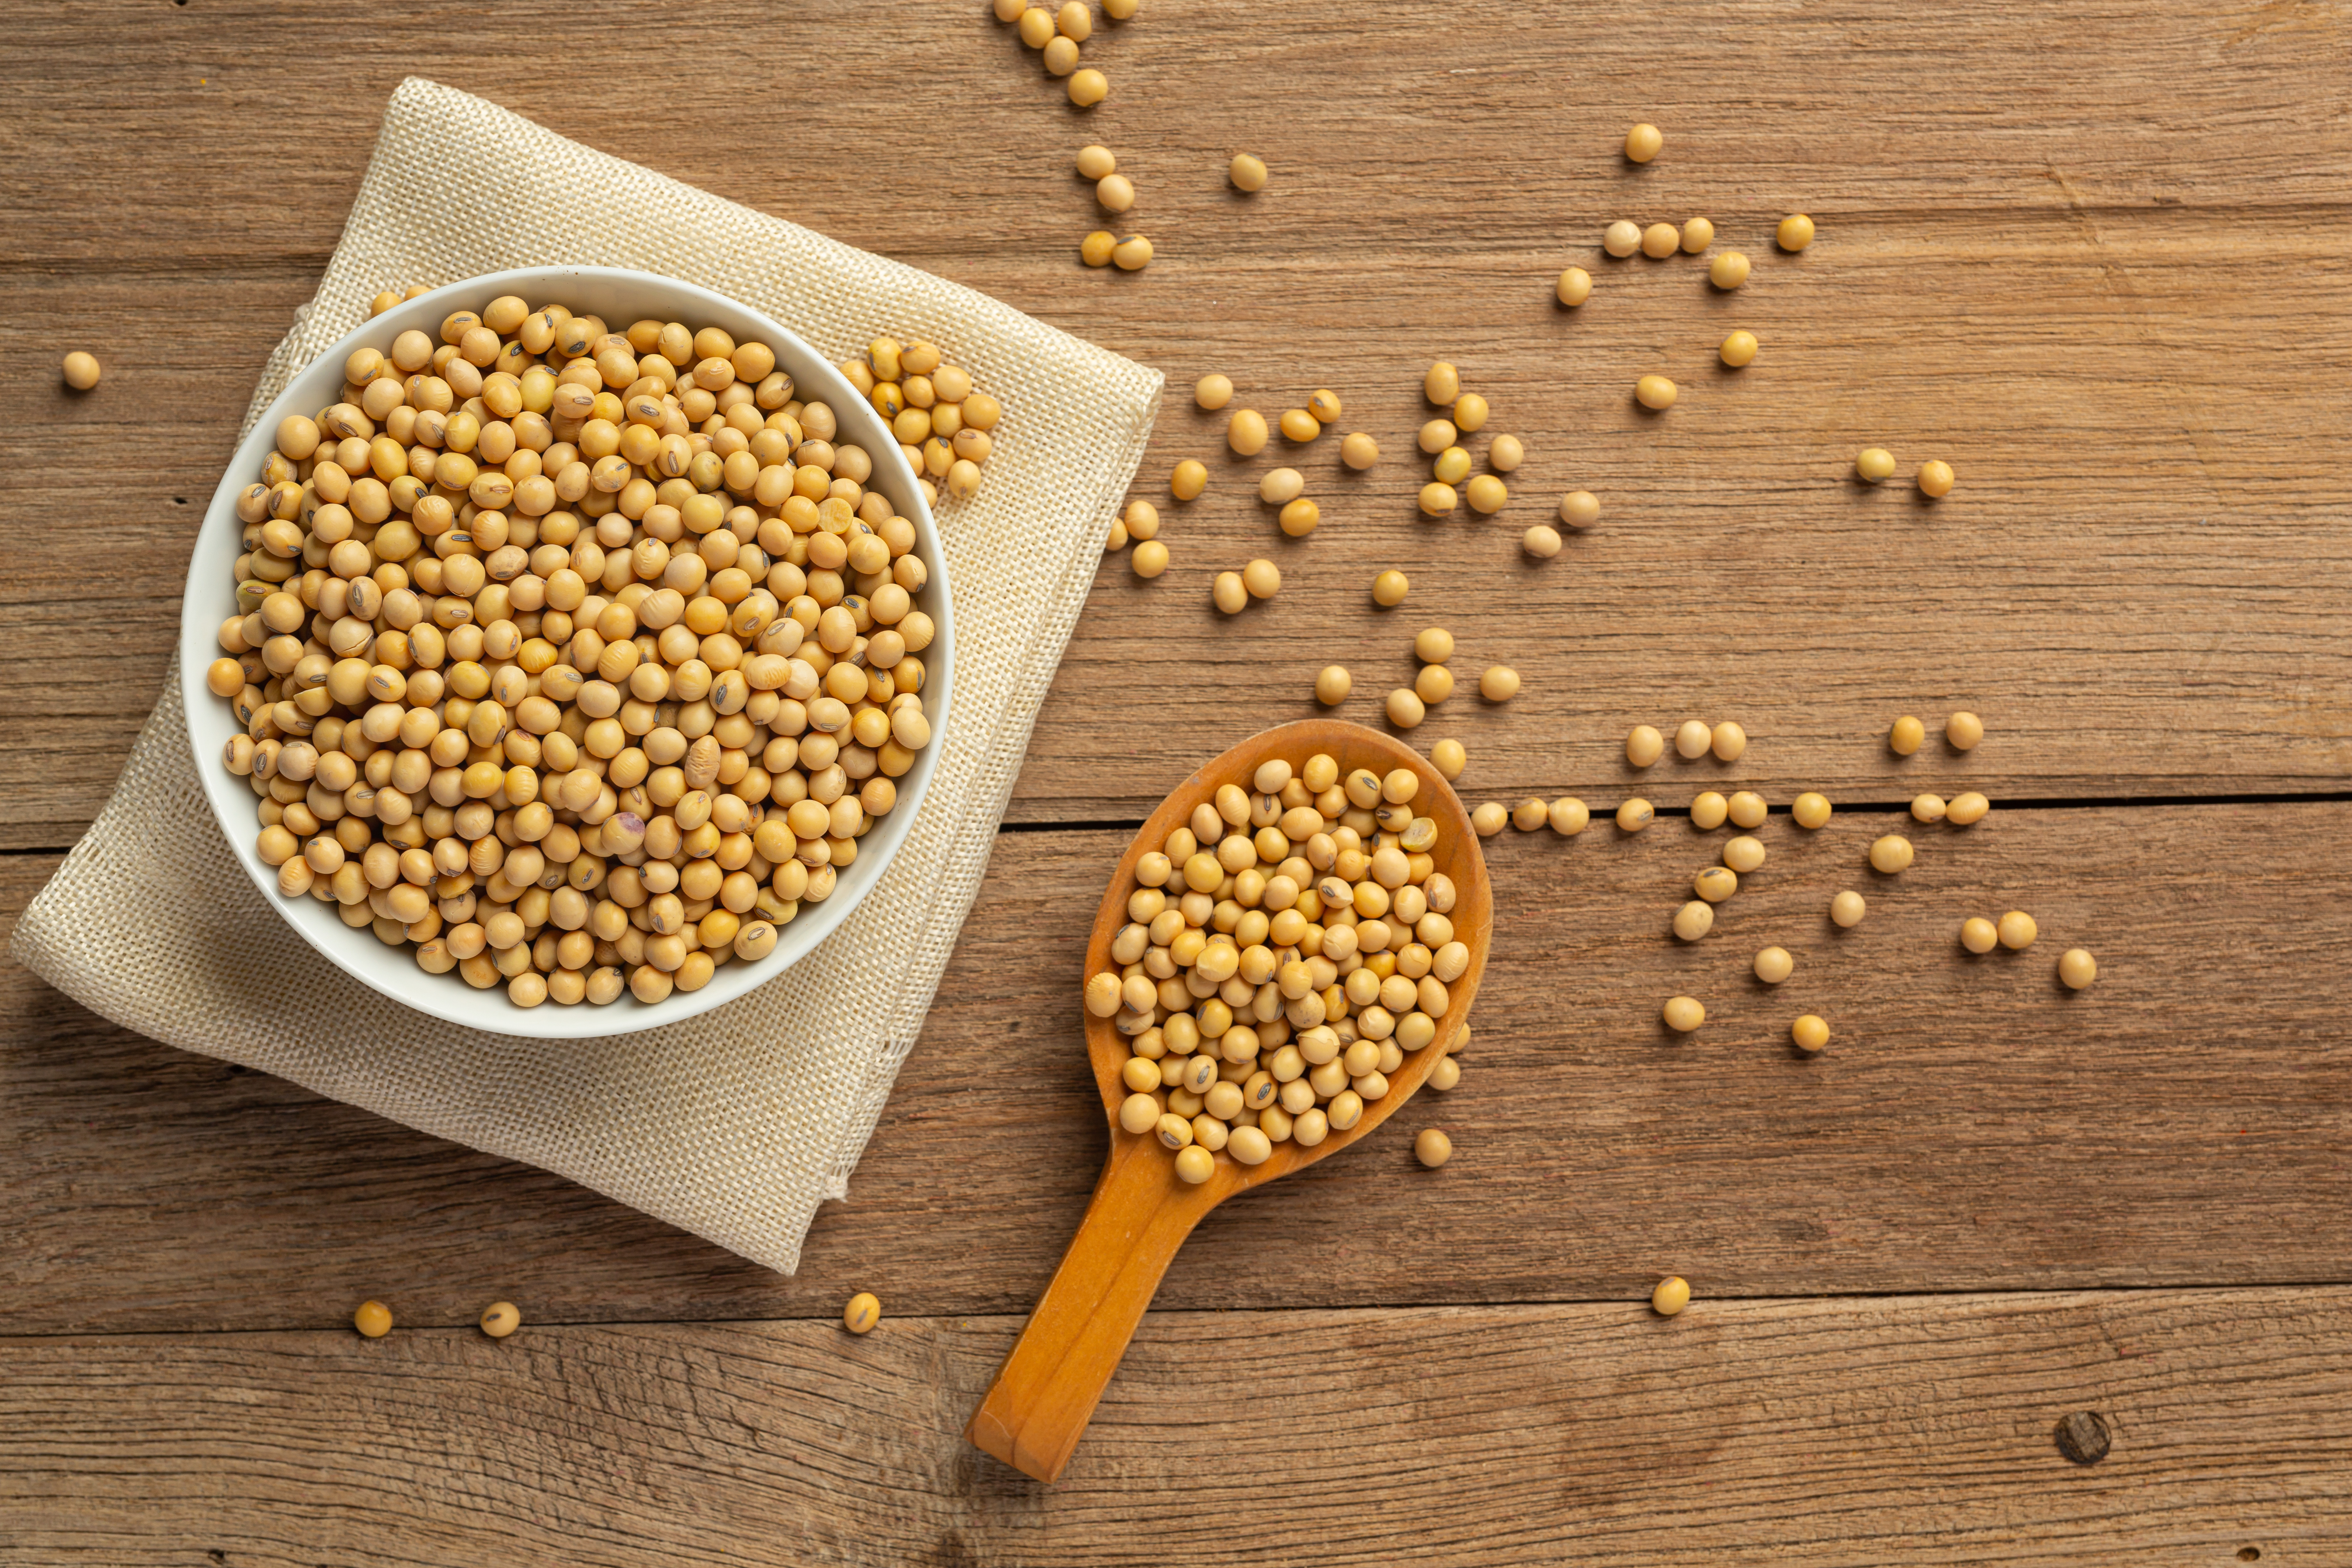 soybean-seeds-wooden-floor-hemp-sacks-food-nutrition-concept